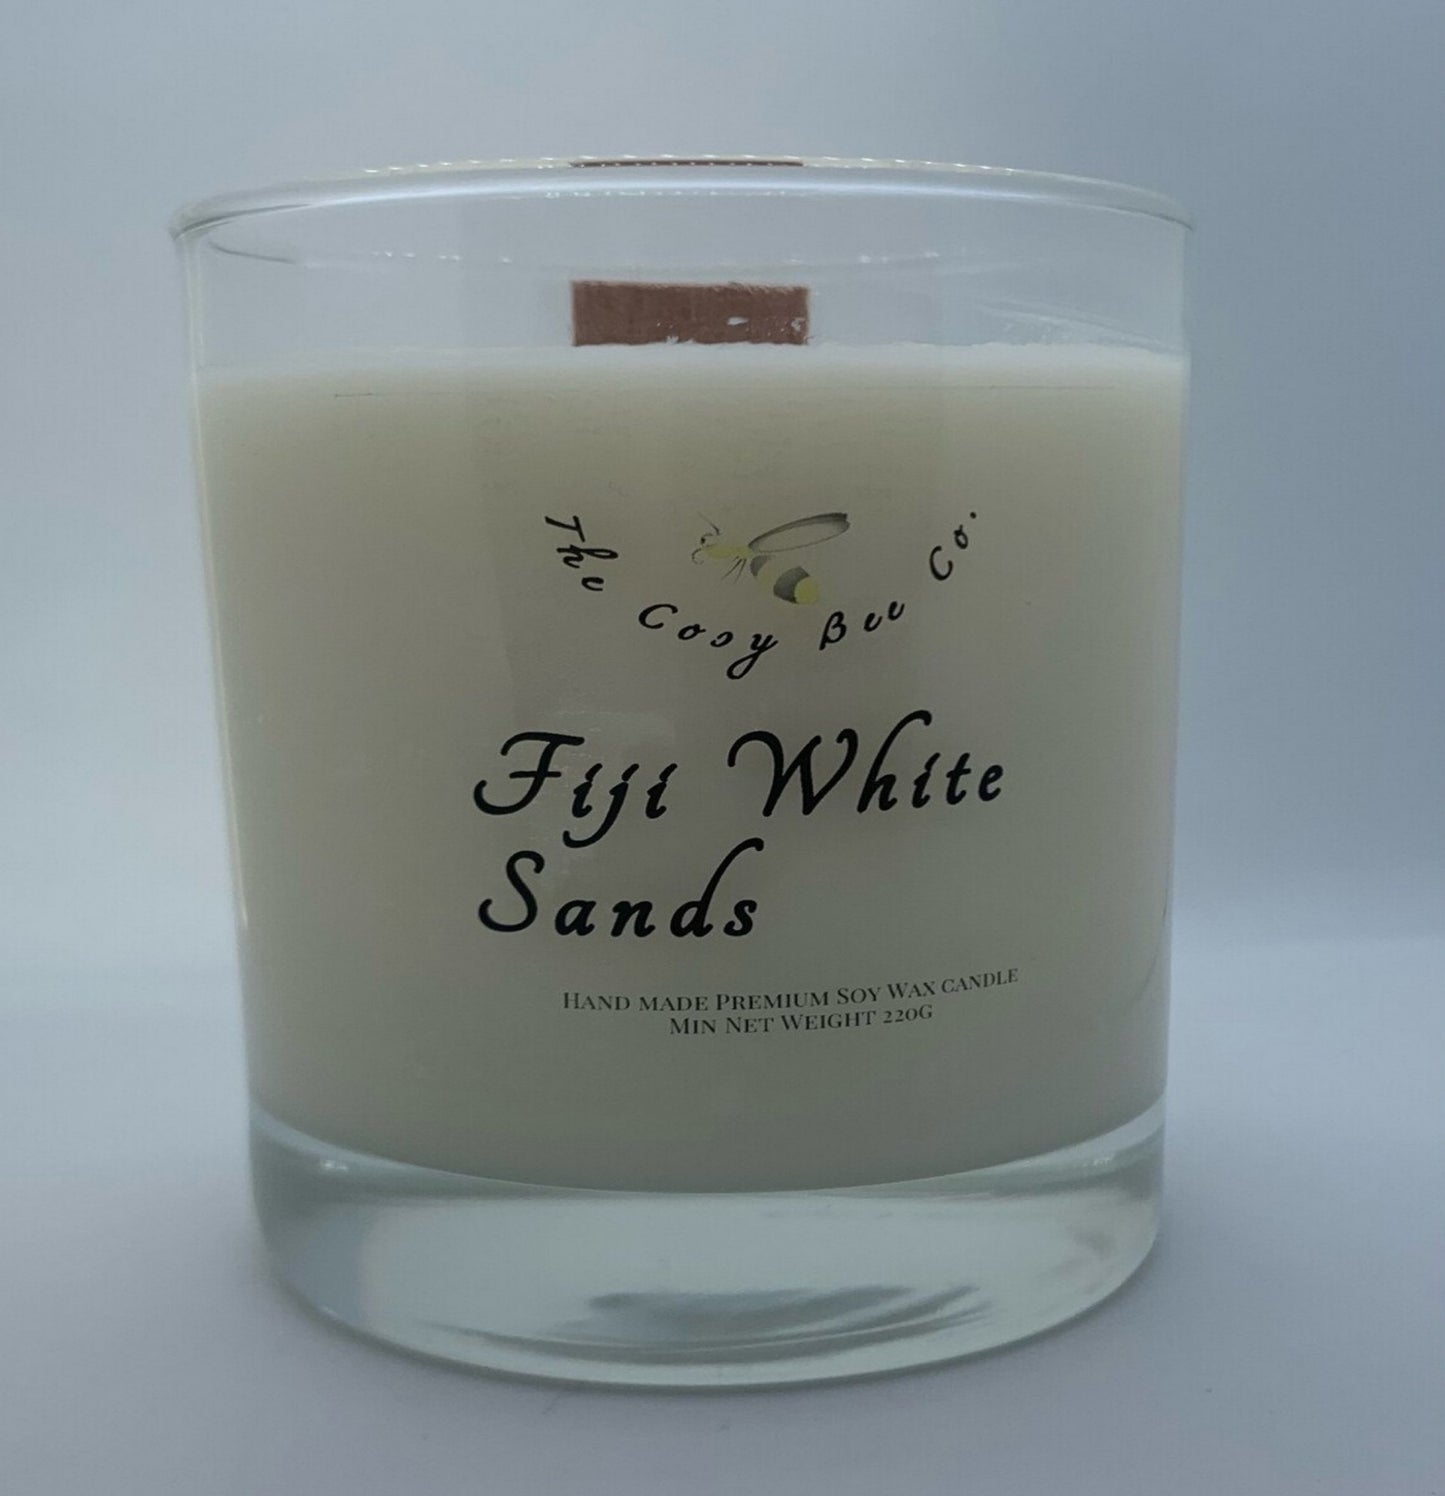 Fiji White Sands